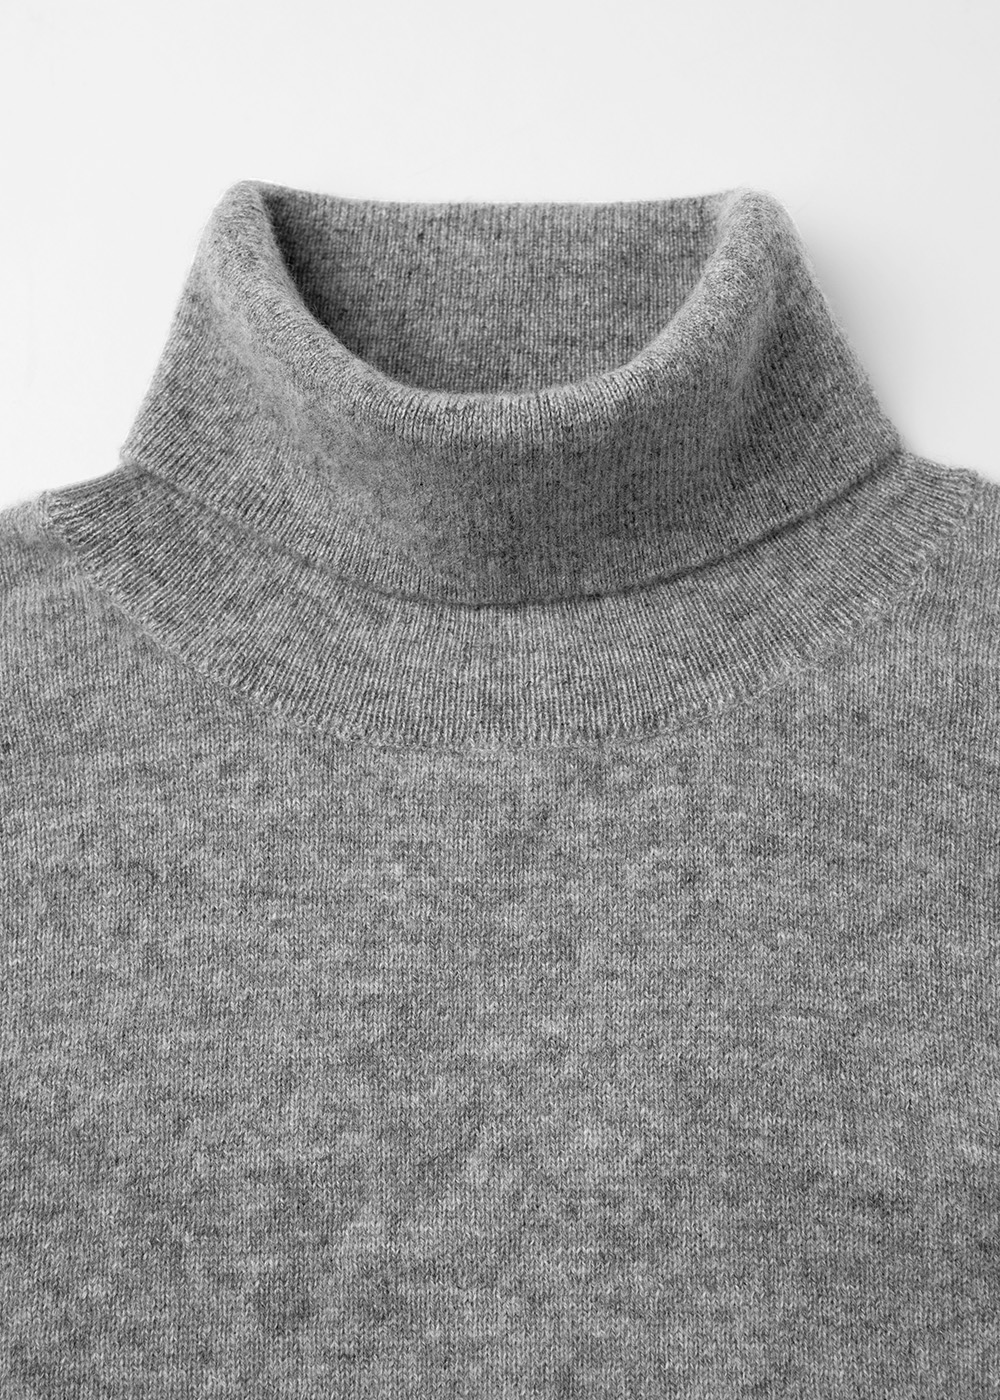 Cashmere 100% Turtleneck Knit _ gray